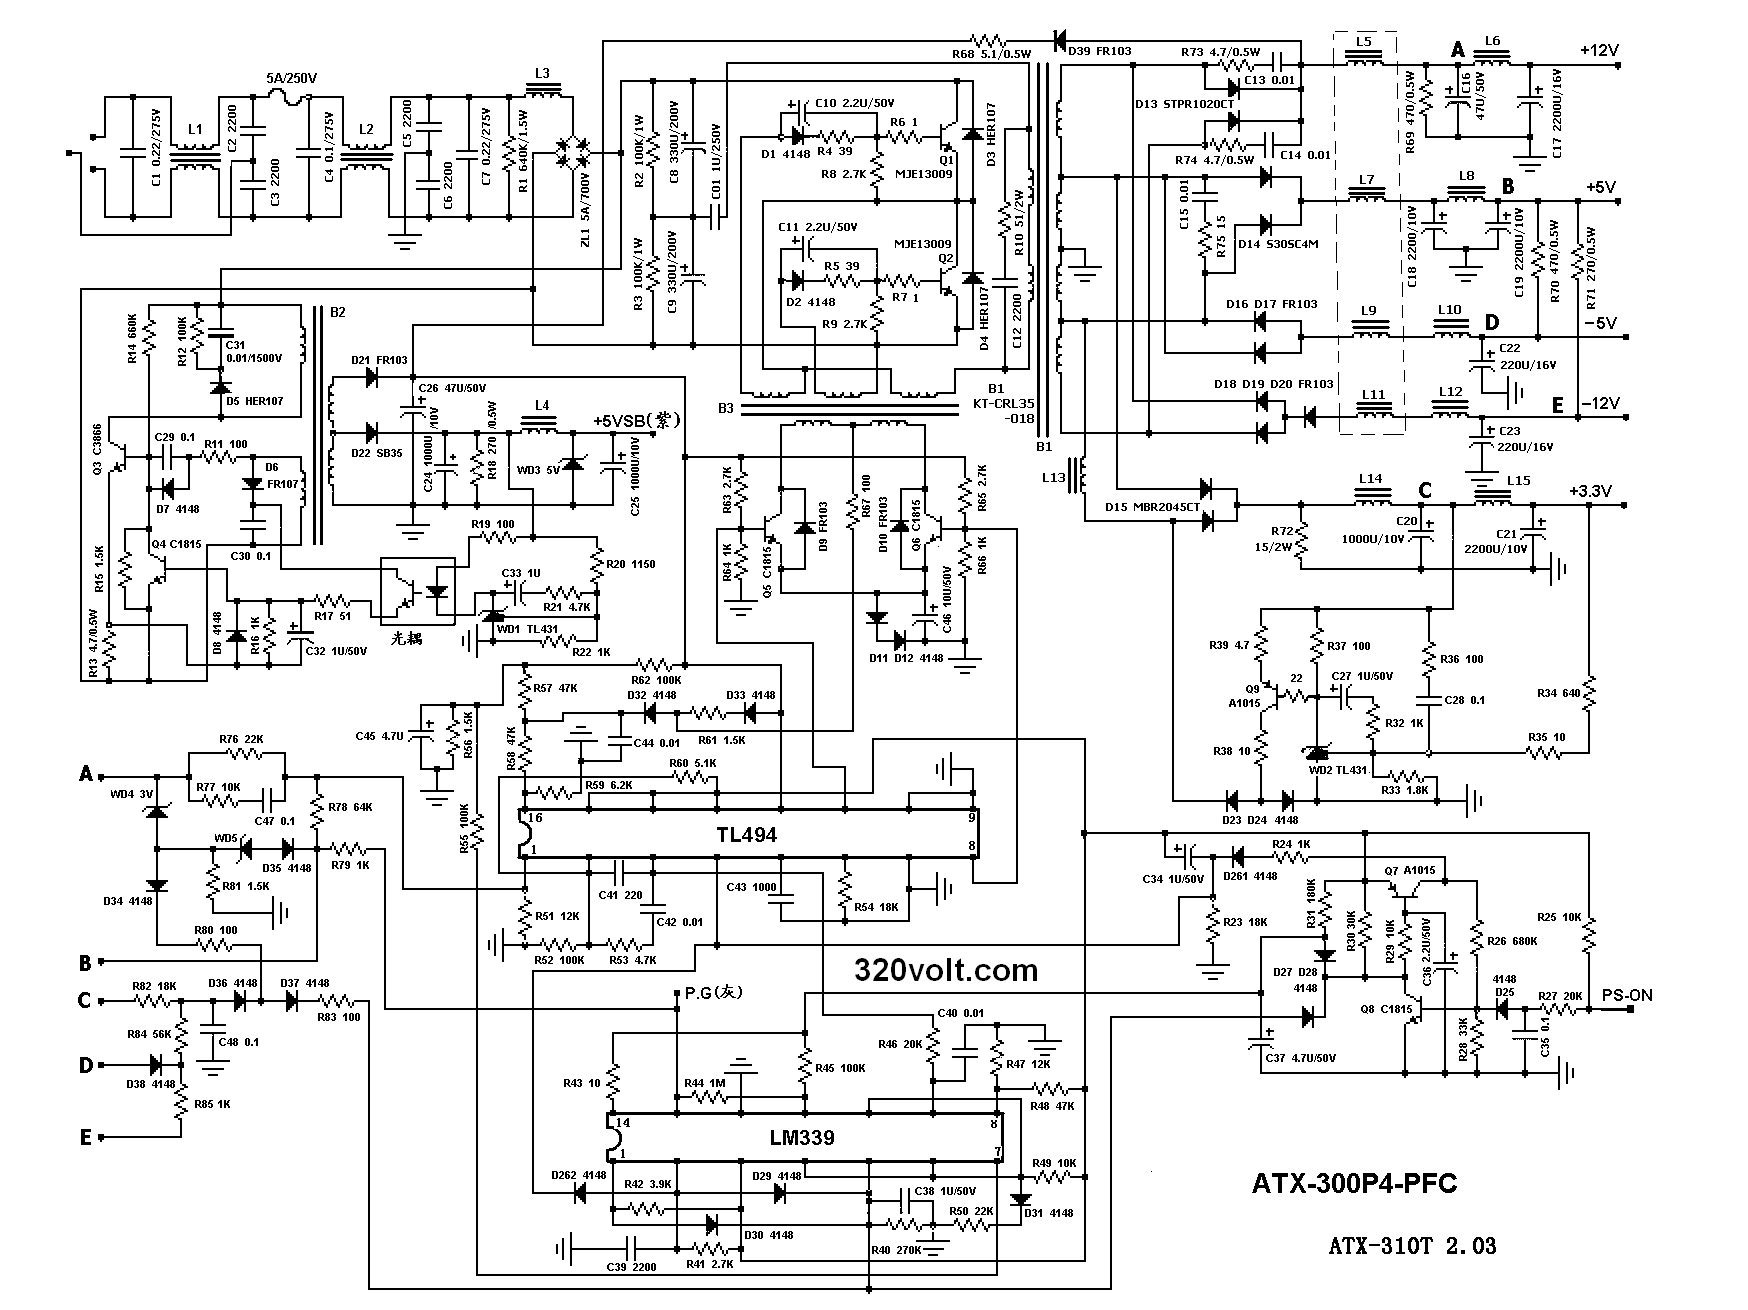 power supply computer diagram